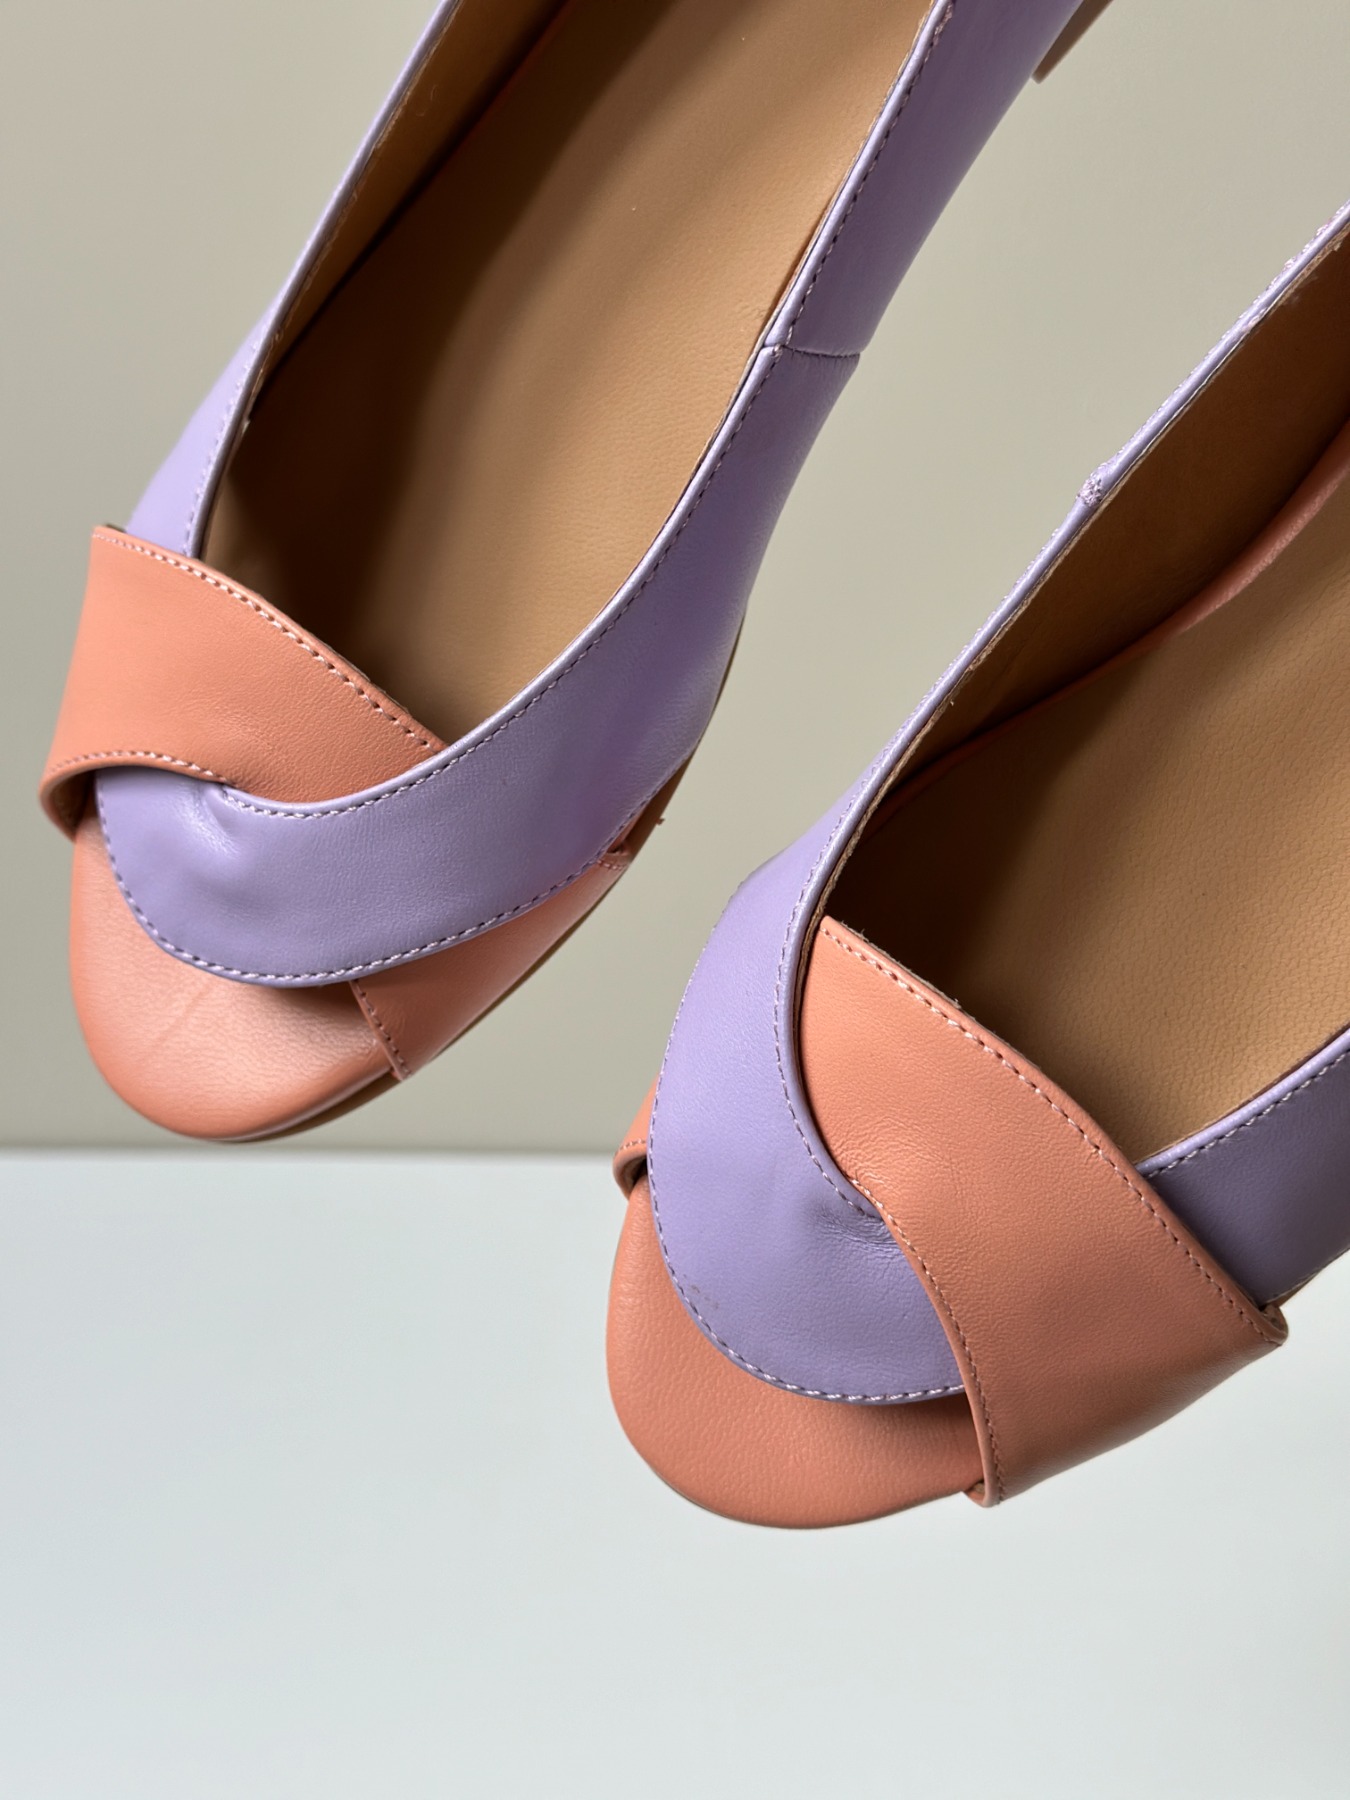 KMB Shoes - Ballerina SOFIE - Apricot/Lila 5